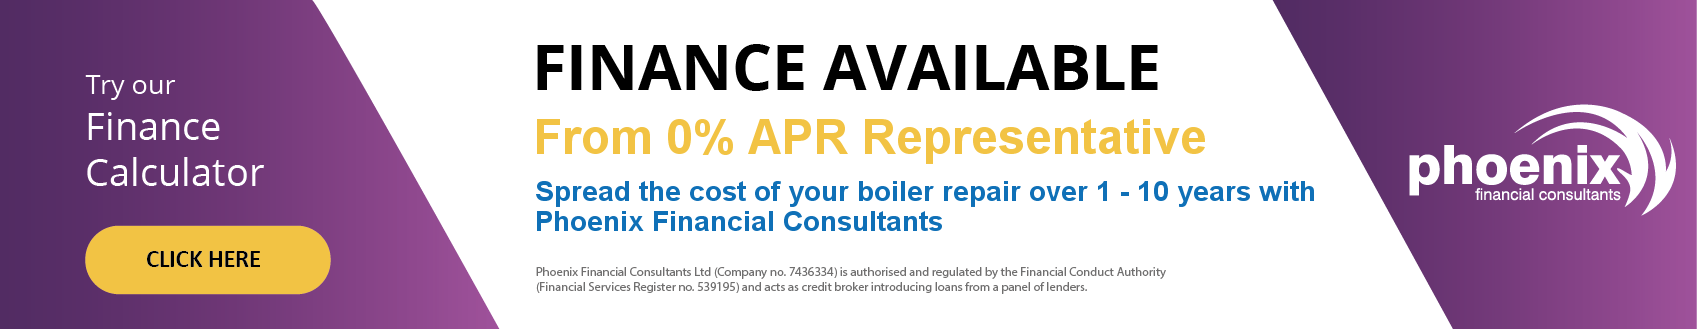 Boiler repair finance available